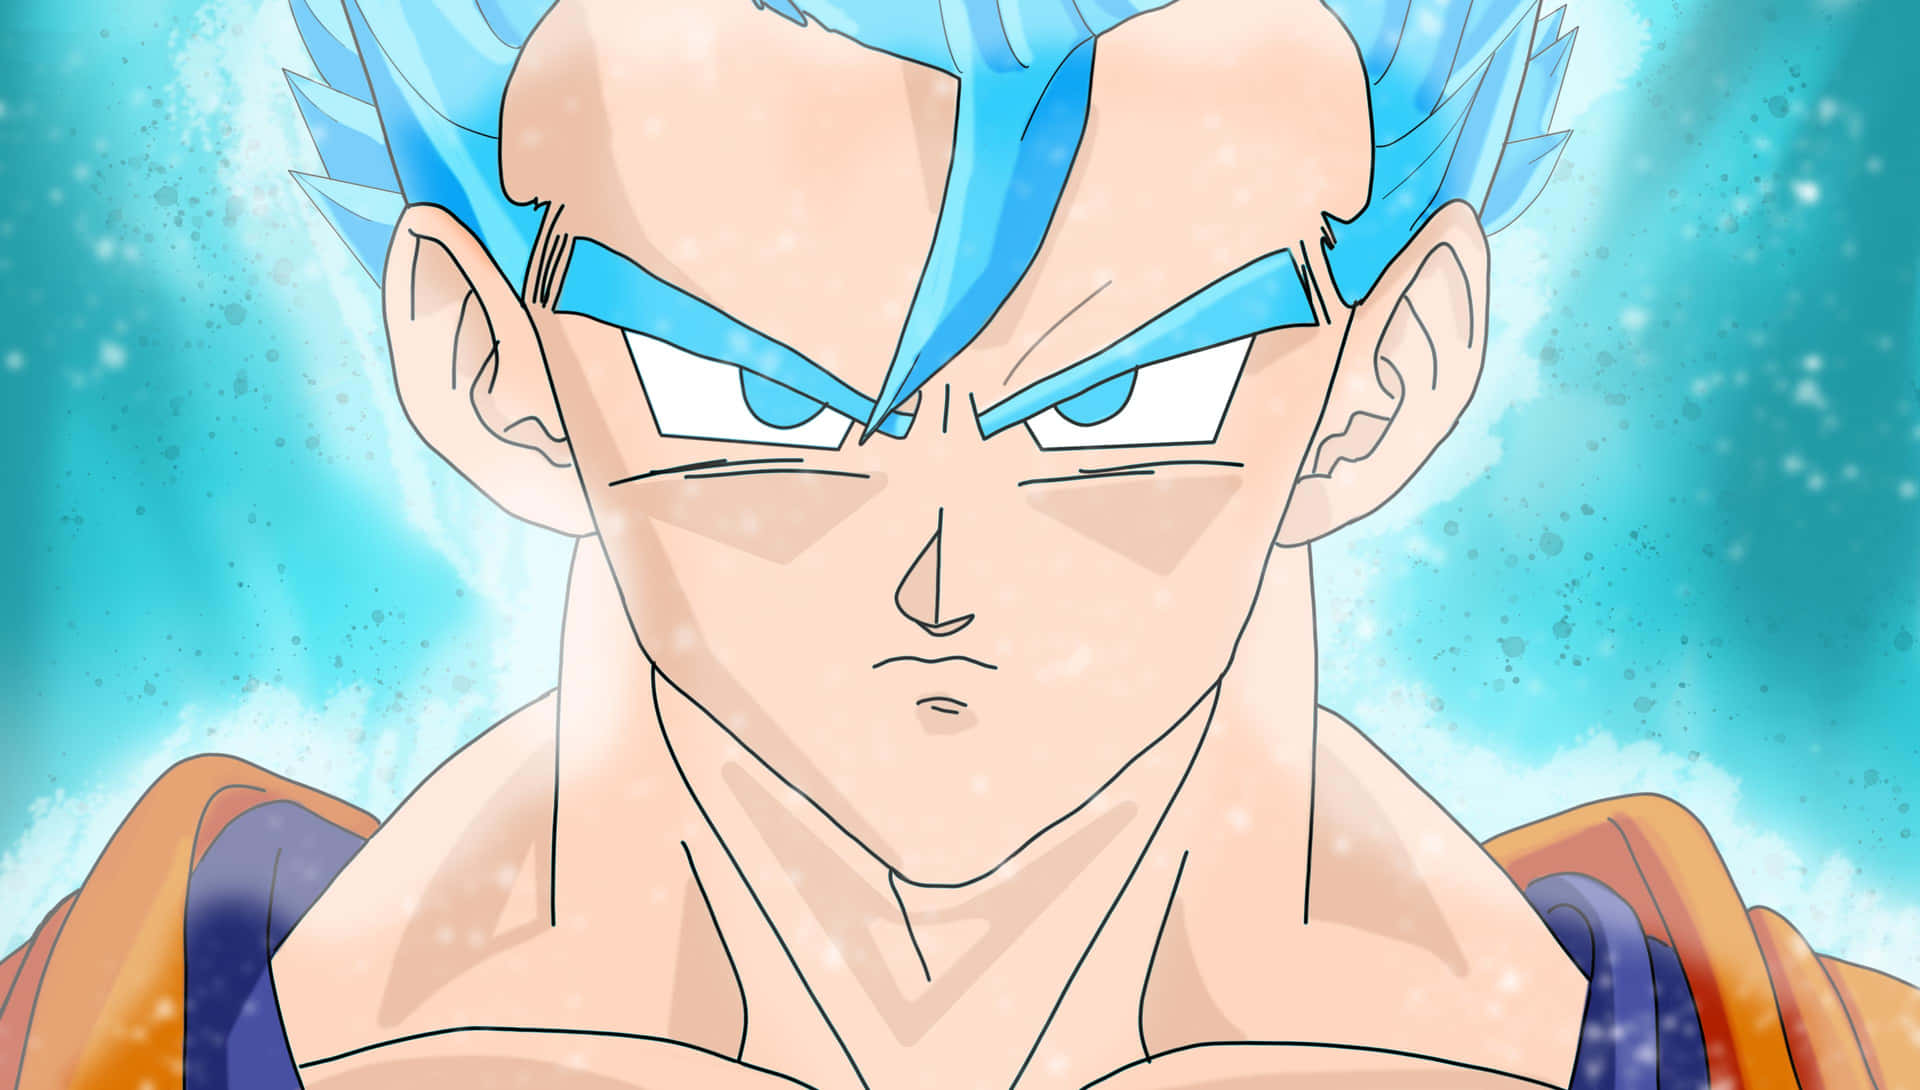 Goku in Super Saiyan Blue Form" Wallpaper